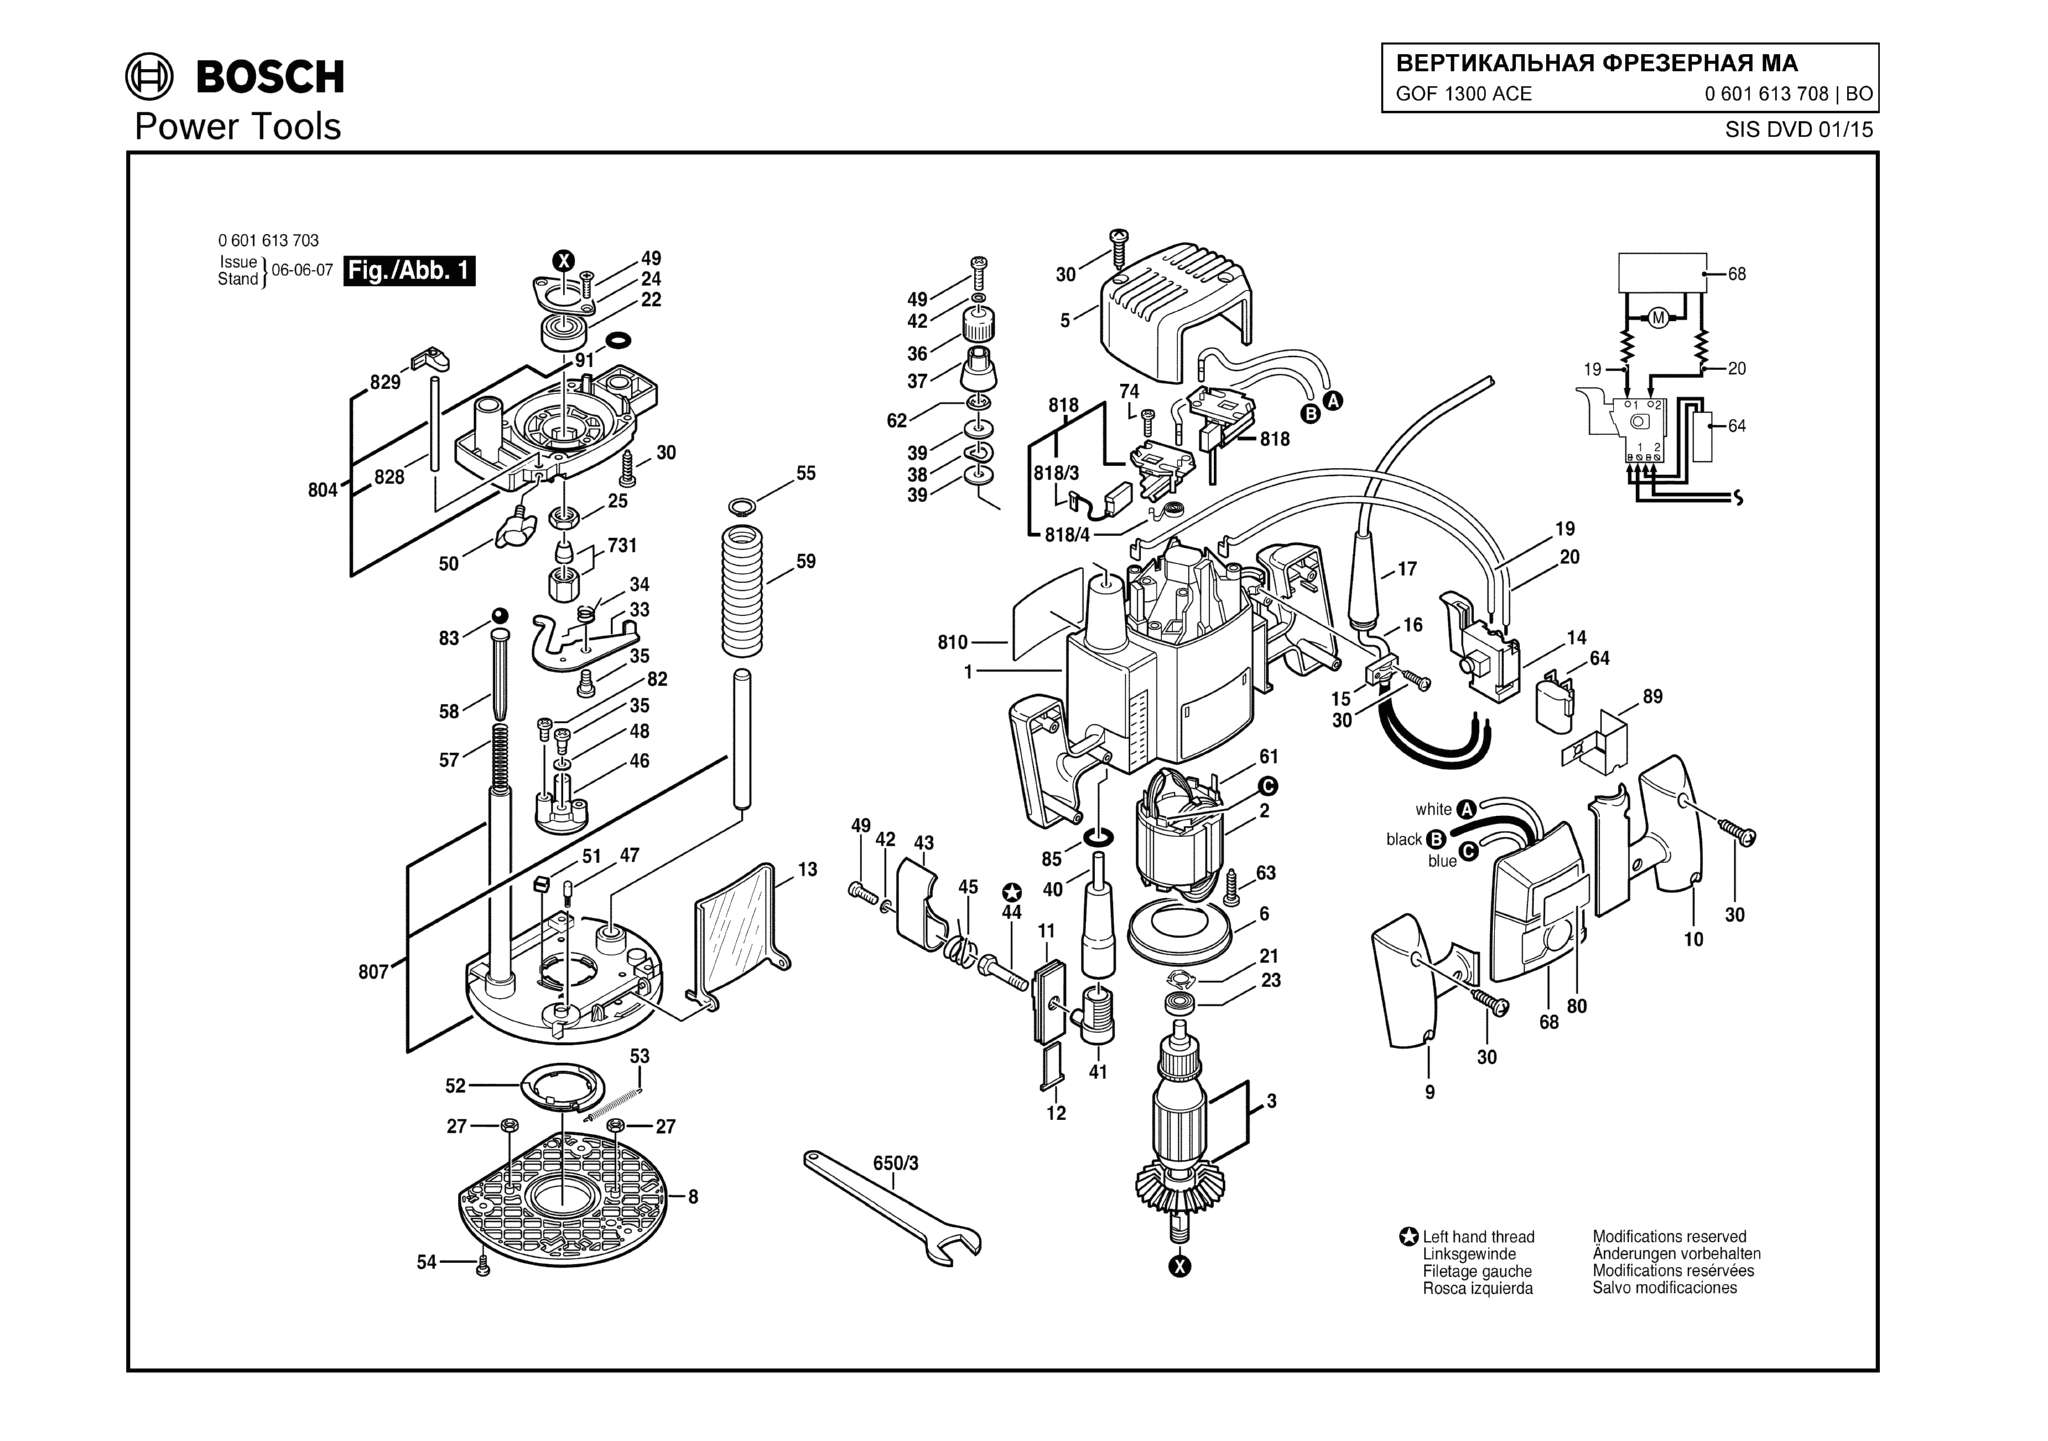 Запчасти, схема и деталировка Bosch GOF 1300 ACE (ТИП 0601613708)